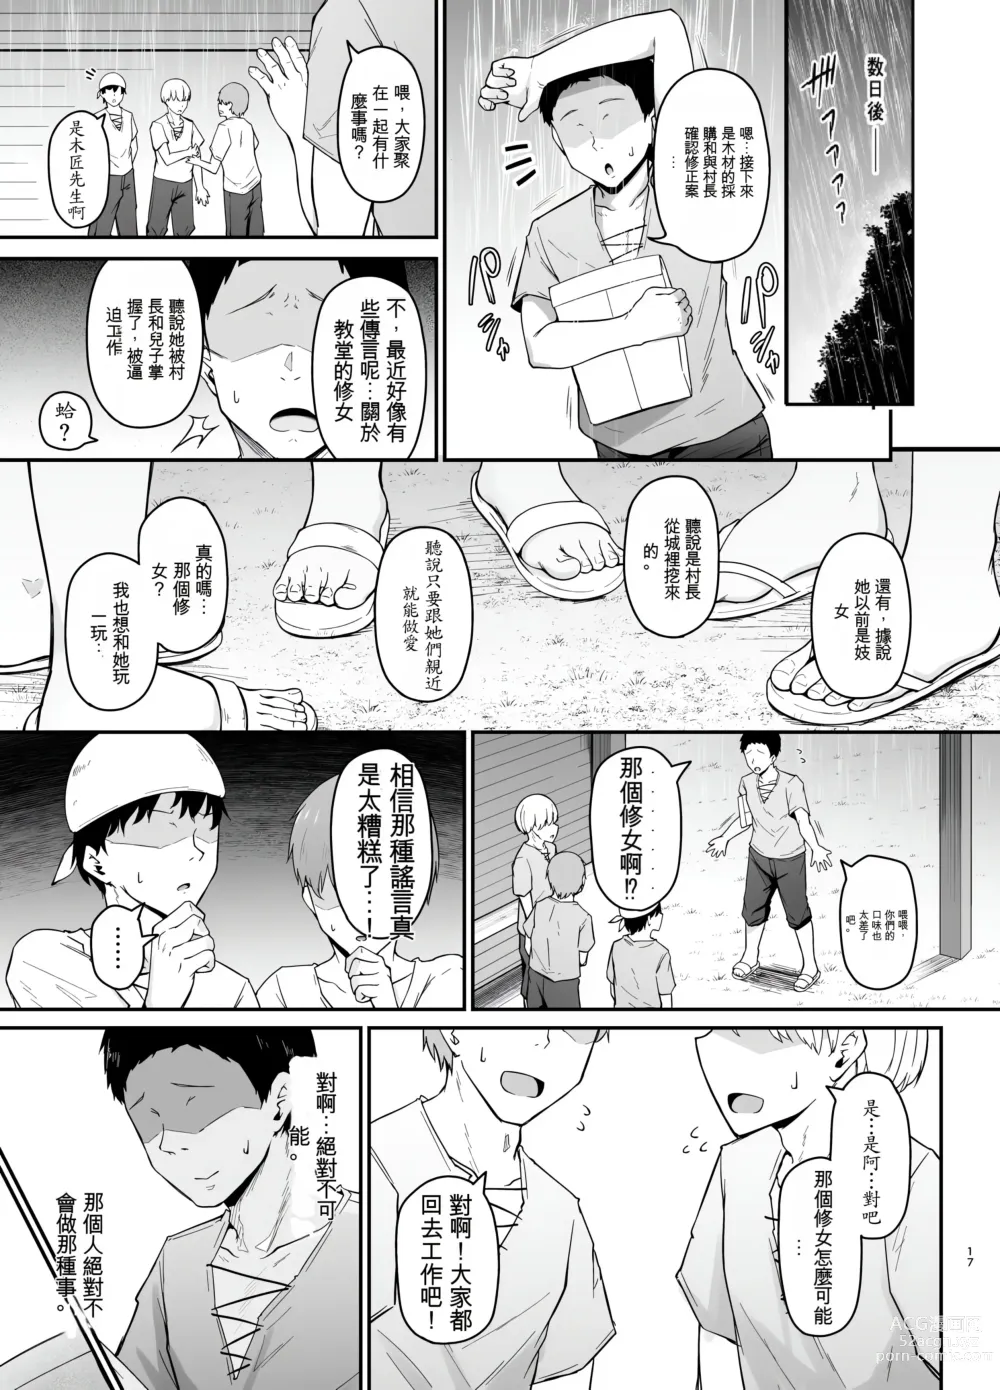 Page 16 of doujinshi 你討厭沒有品位的女性嗎？